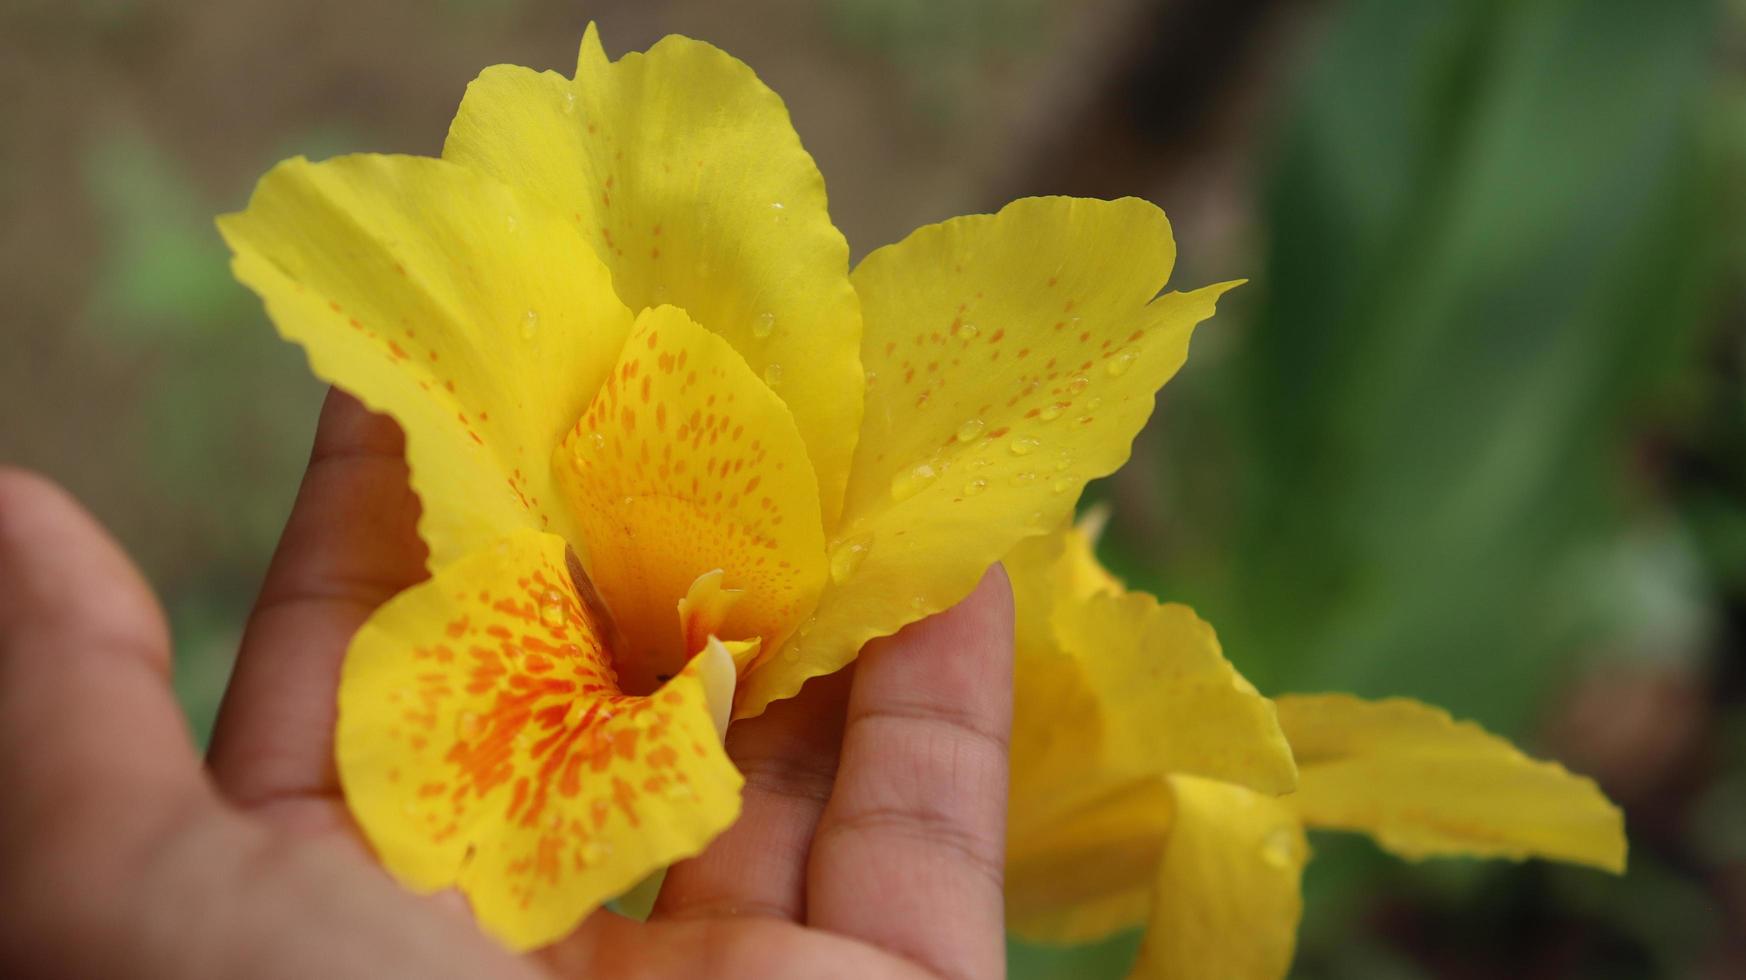 yellow flower in hand photo